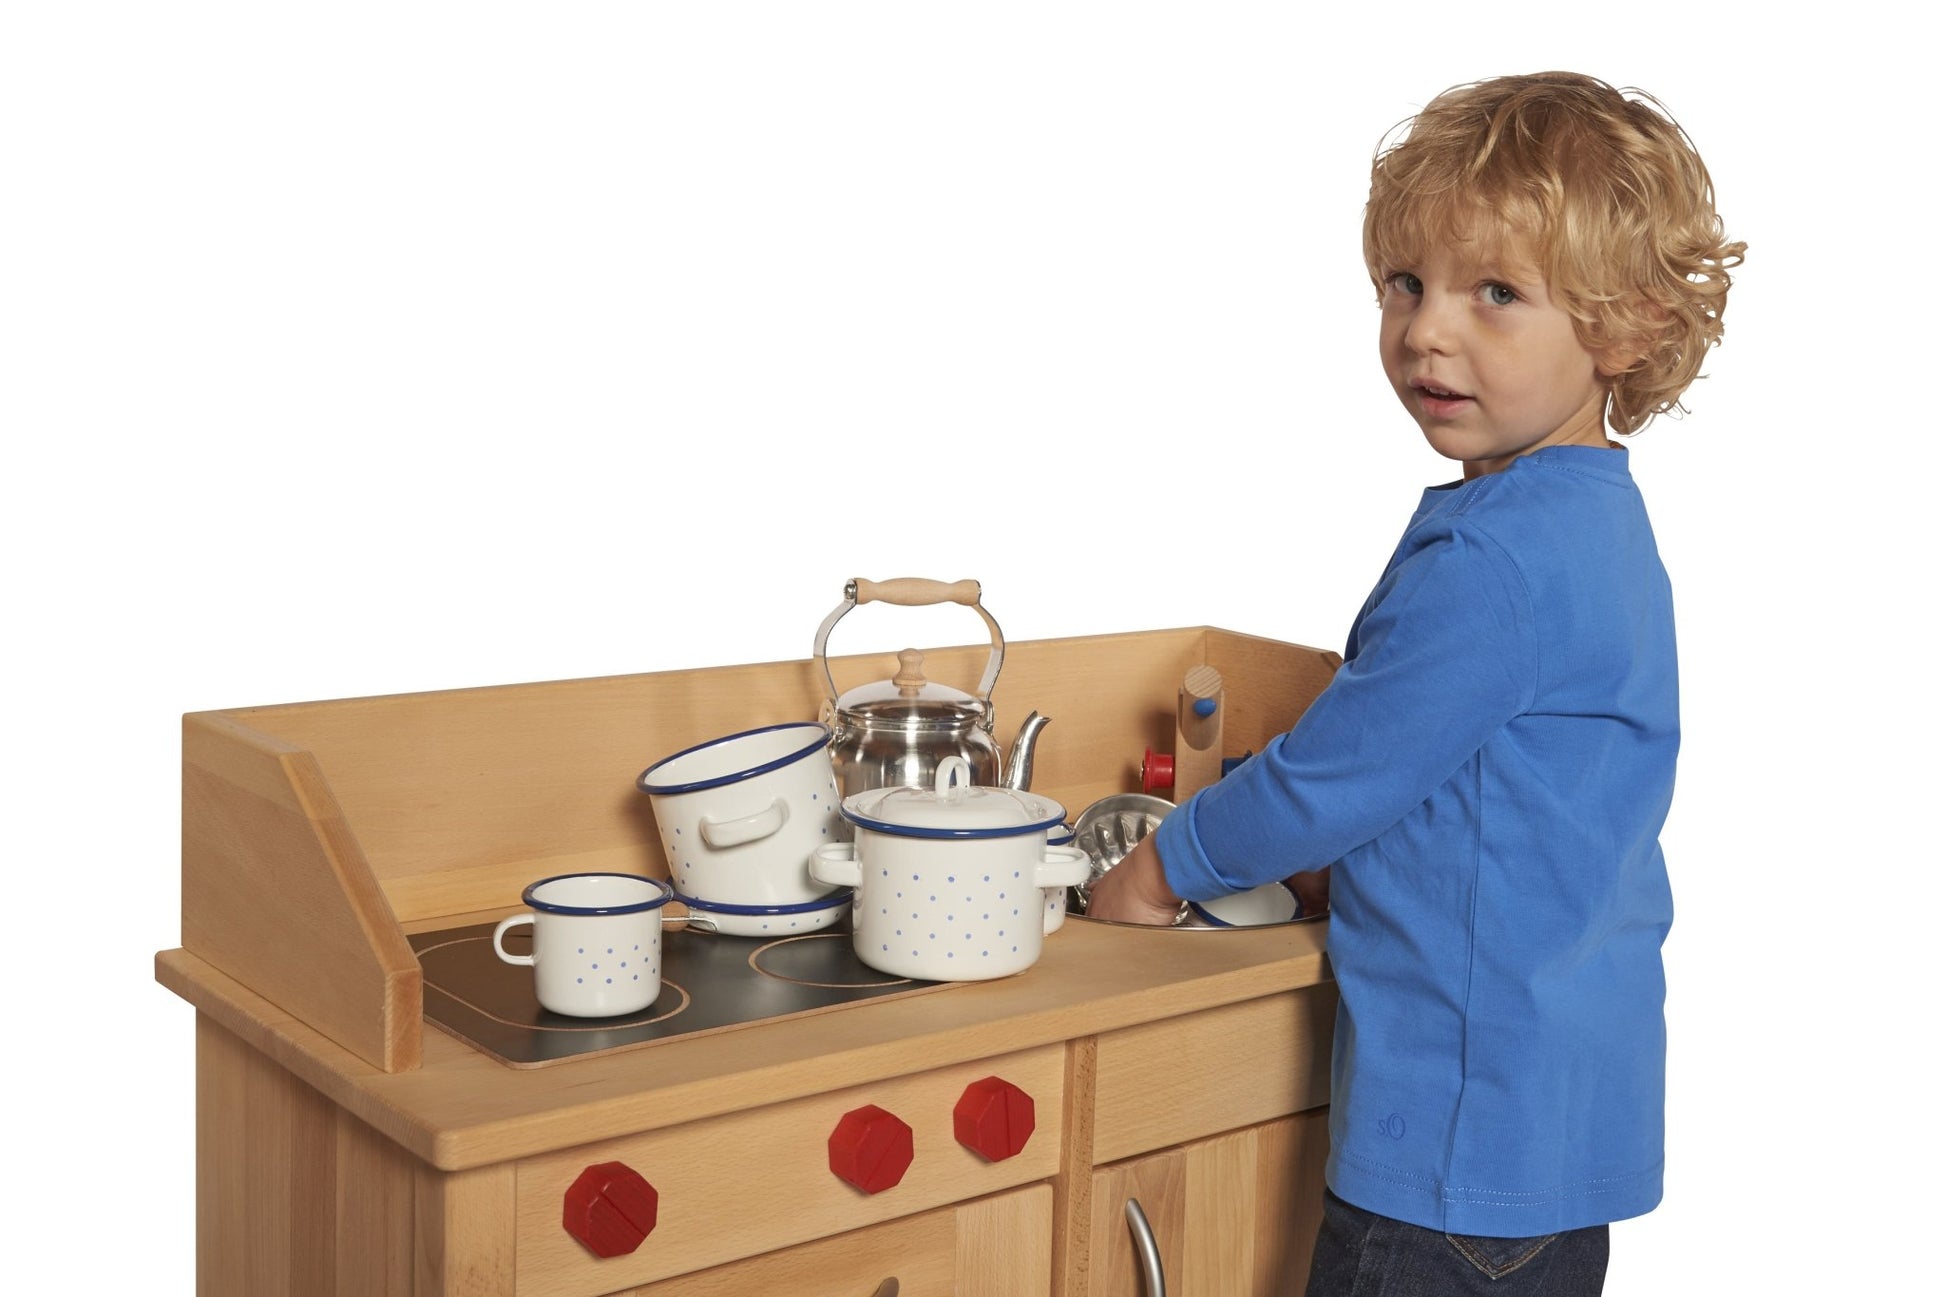 Eco-friendly Wooden Play Kitchen Set Montessori Kitchen Eco Friendly Toy  Waldorf Toys Wooden Kitchen Set -  Denmark